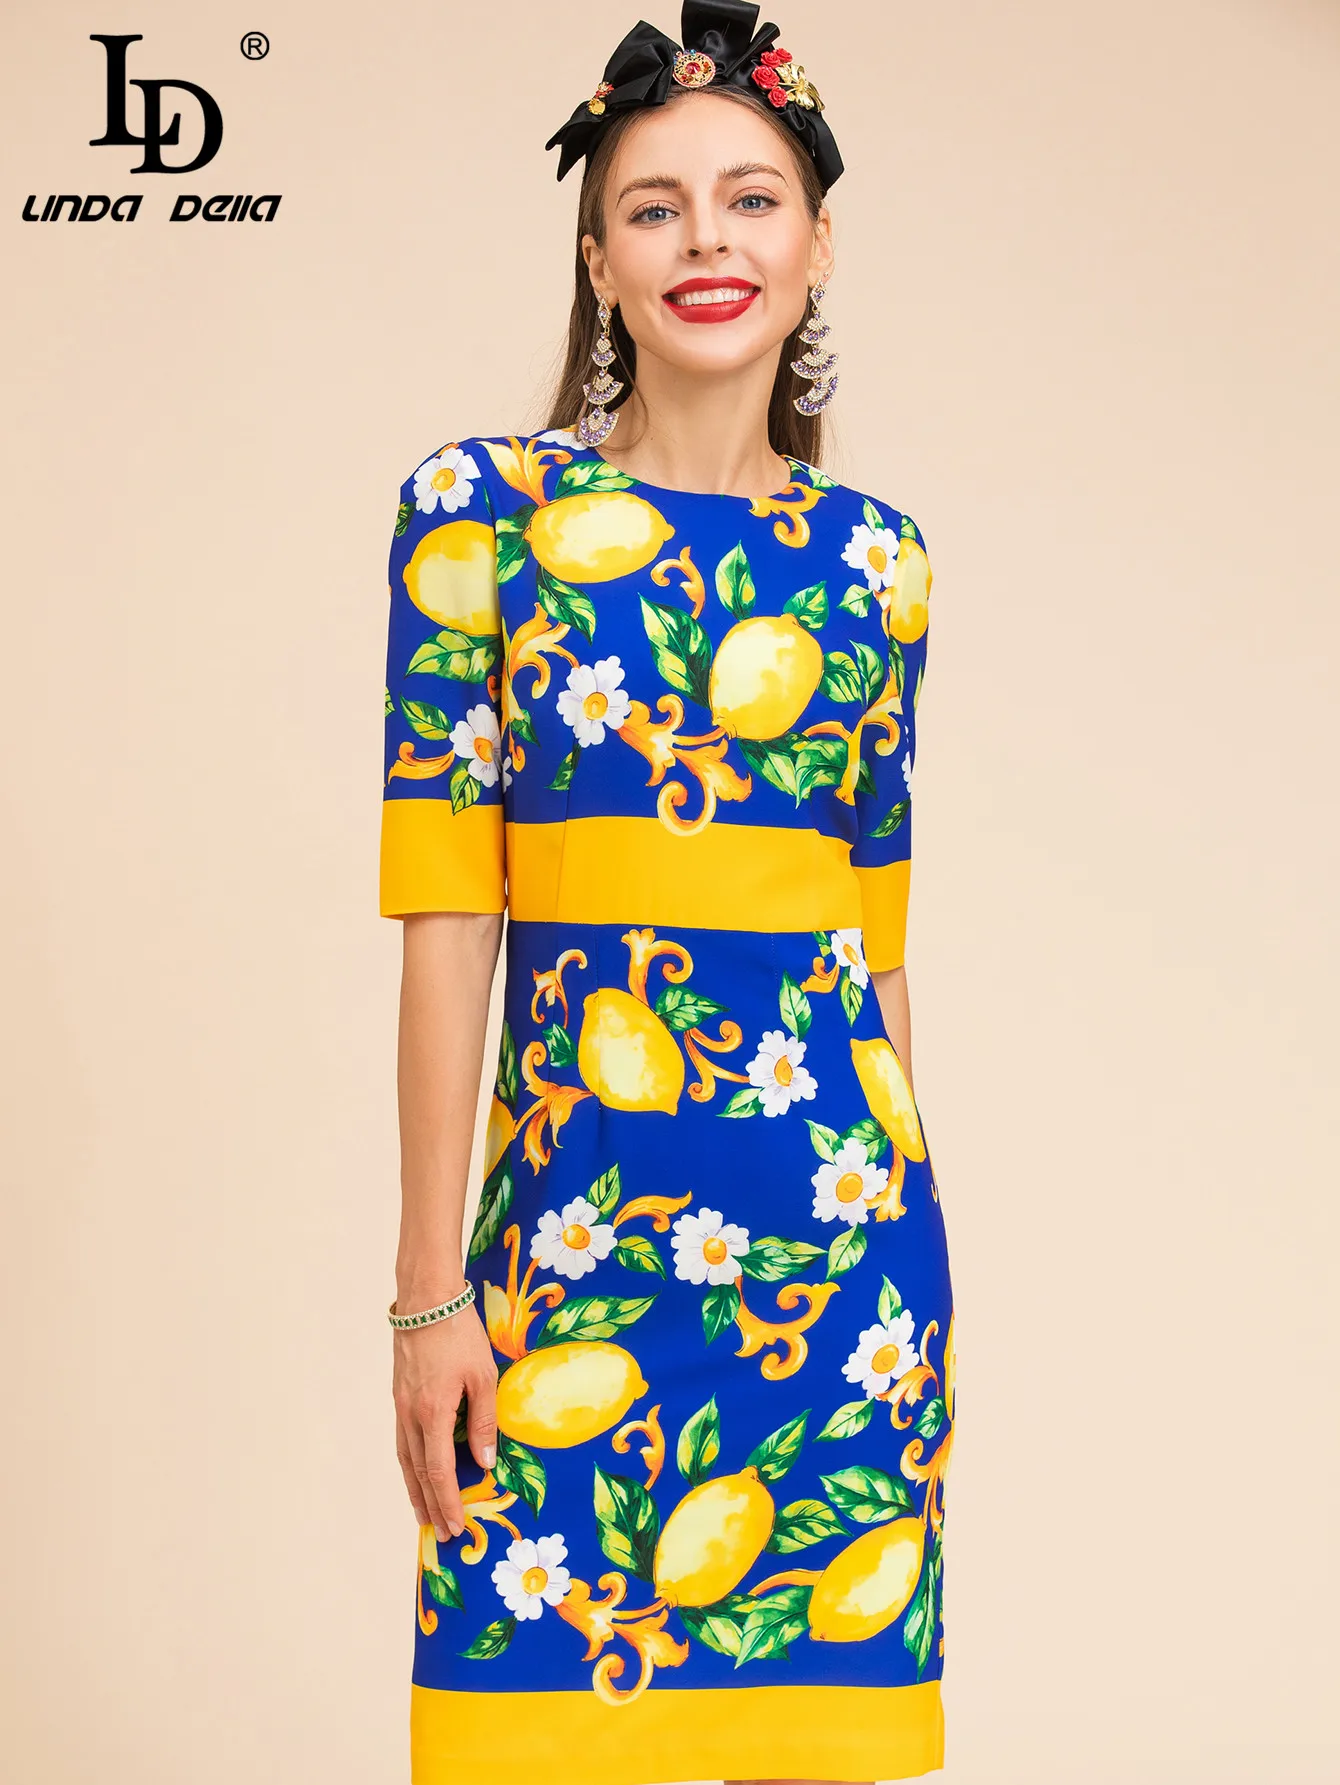 LD LINDA DELLA Fashion Designer Summer Dress Women's Slim Short Sleeve Lemon Flower Print Blue Elegant Holiday Party Knee Dress